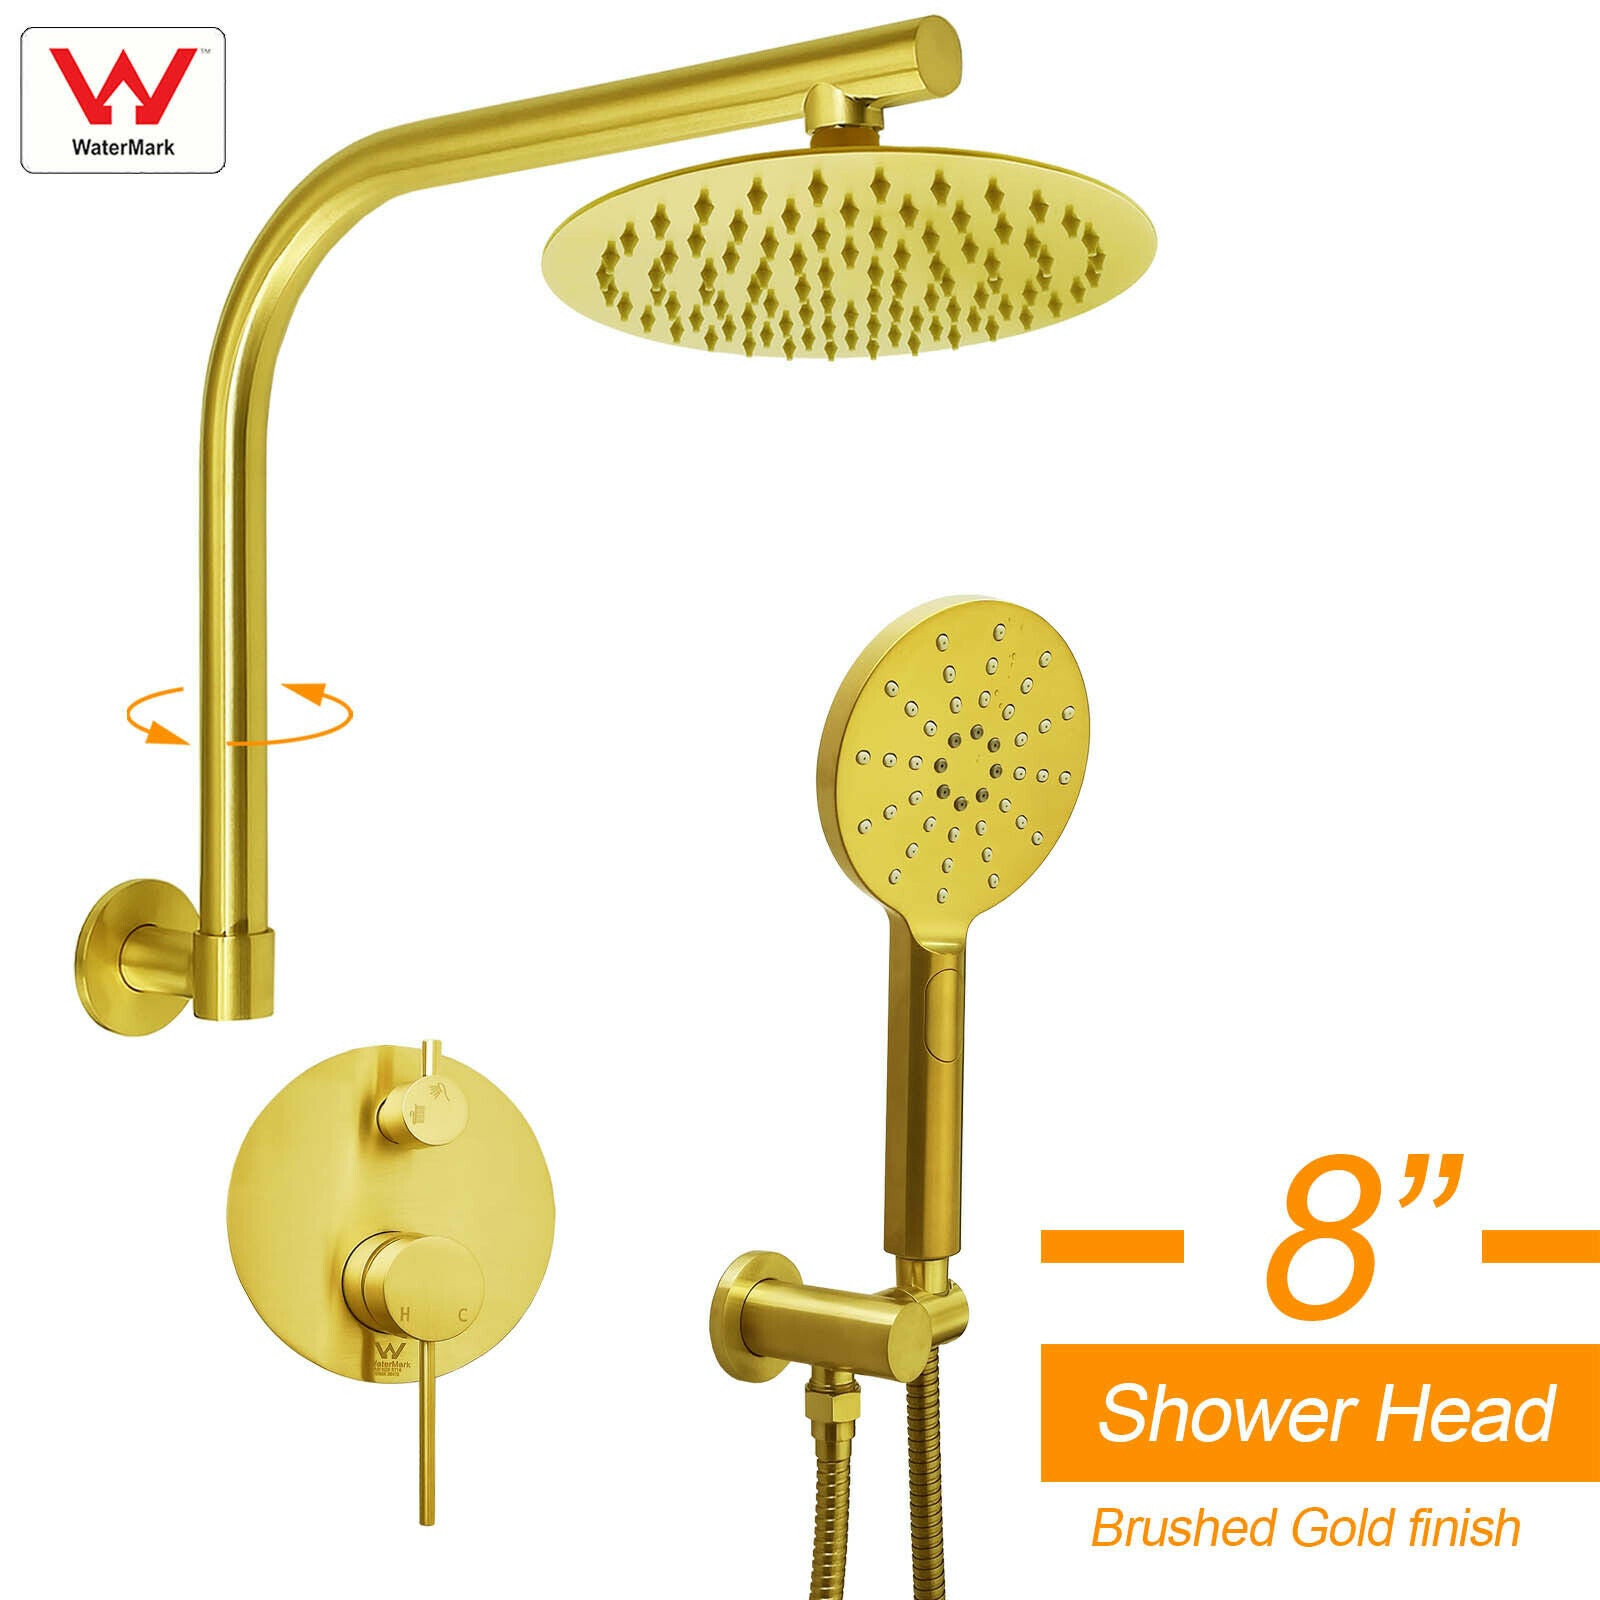 WELS Brushed Gold 8" Round Rainfall Shower Head 360?? Swivel Gooseneck Arm Combo